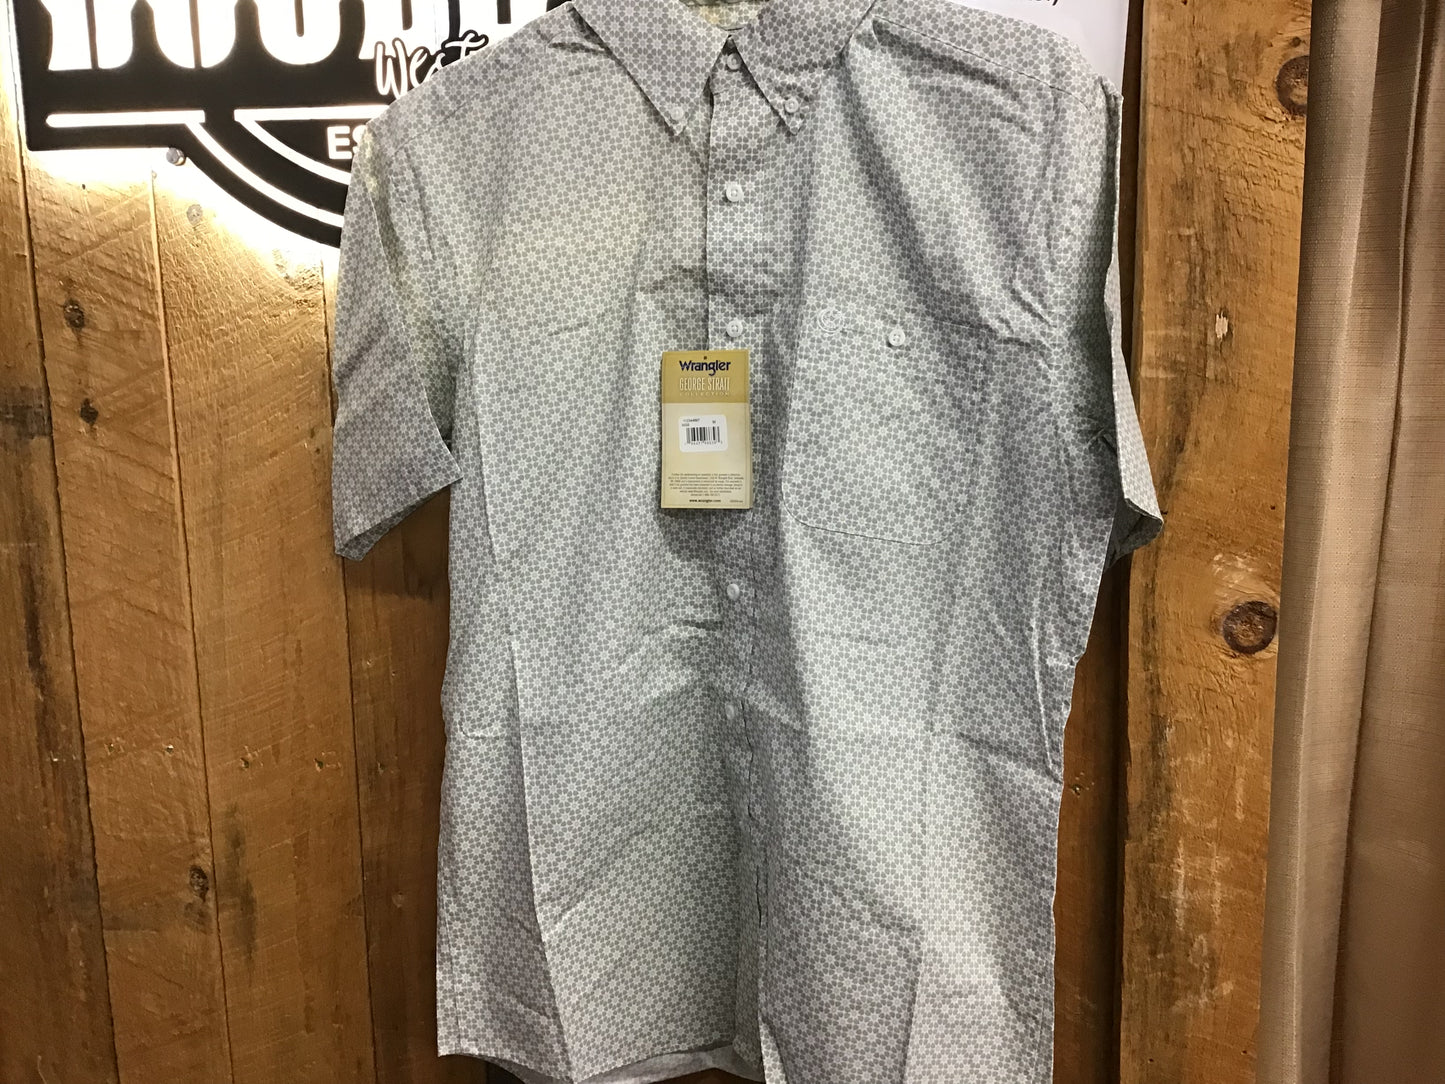 Wrangler® George Strait Collection Short Sleeve Shirt - Gray